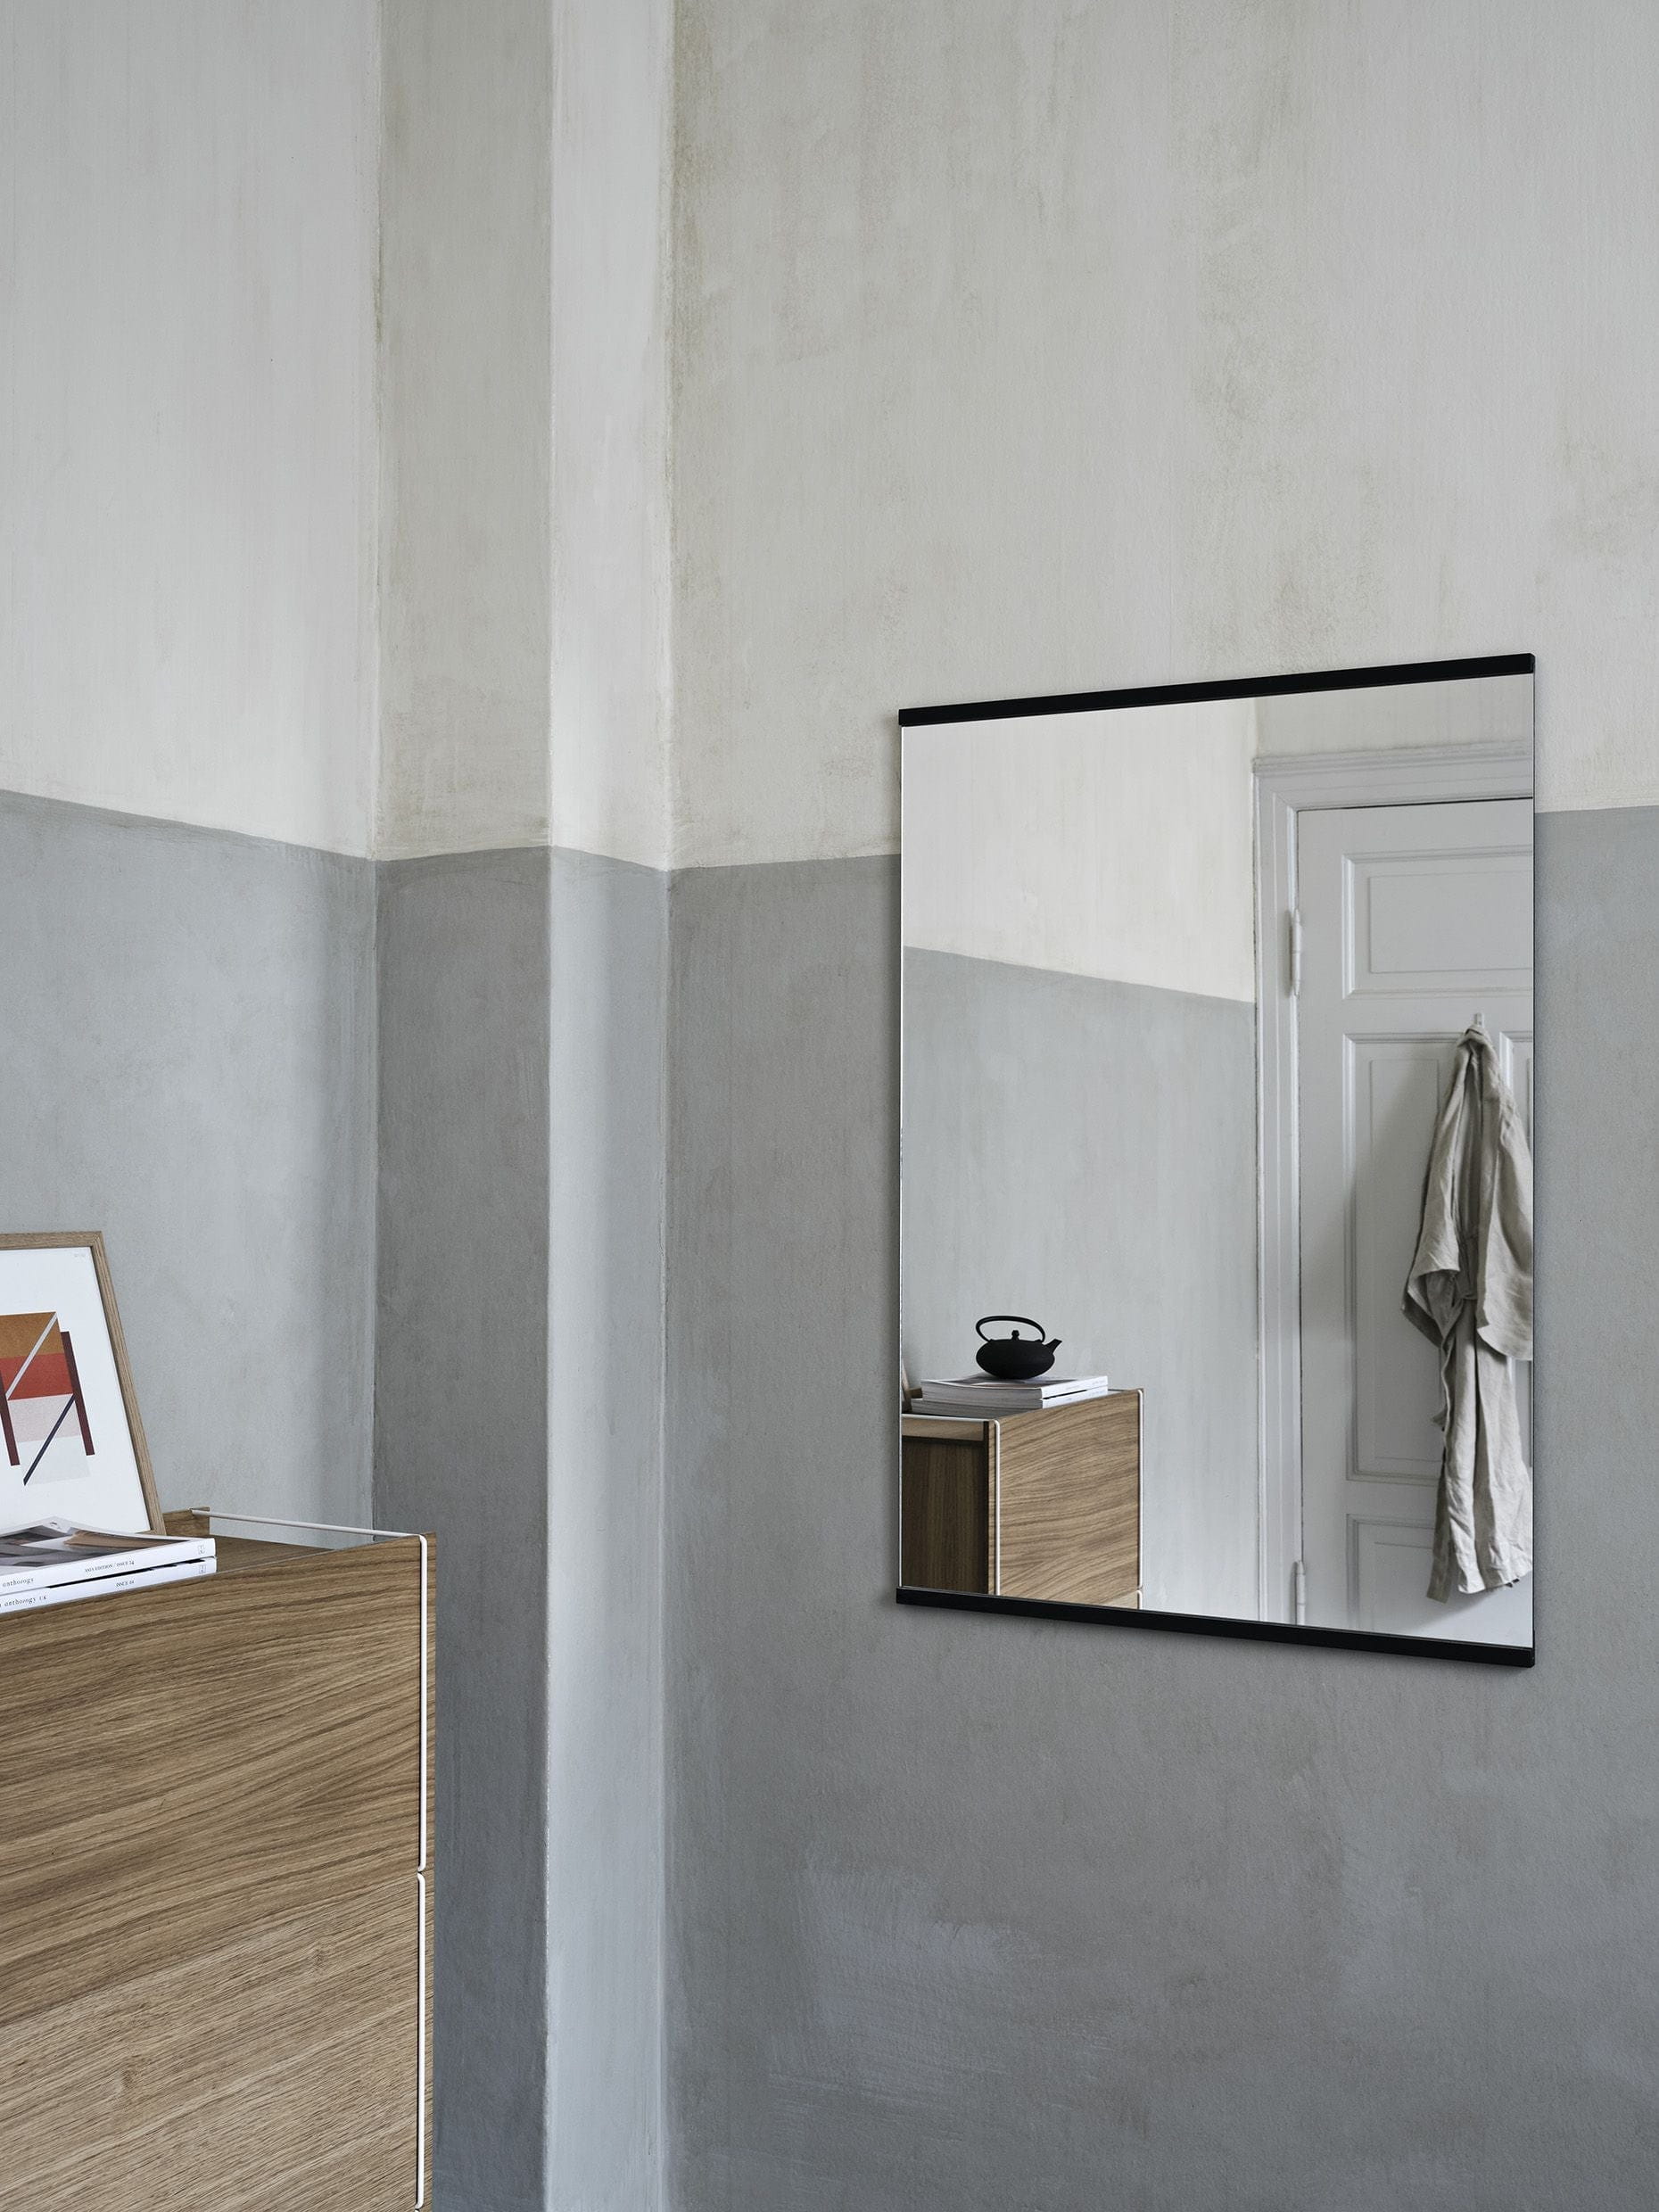 Moebe Mirror de pared rectangular 71,9x50 cm, negro